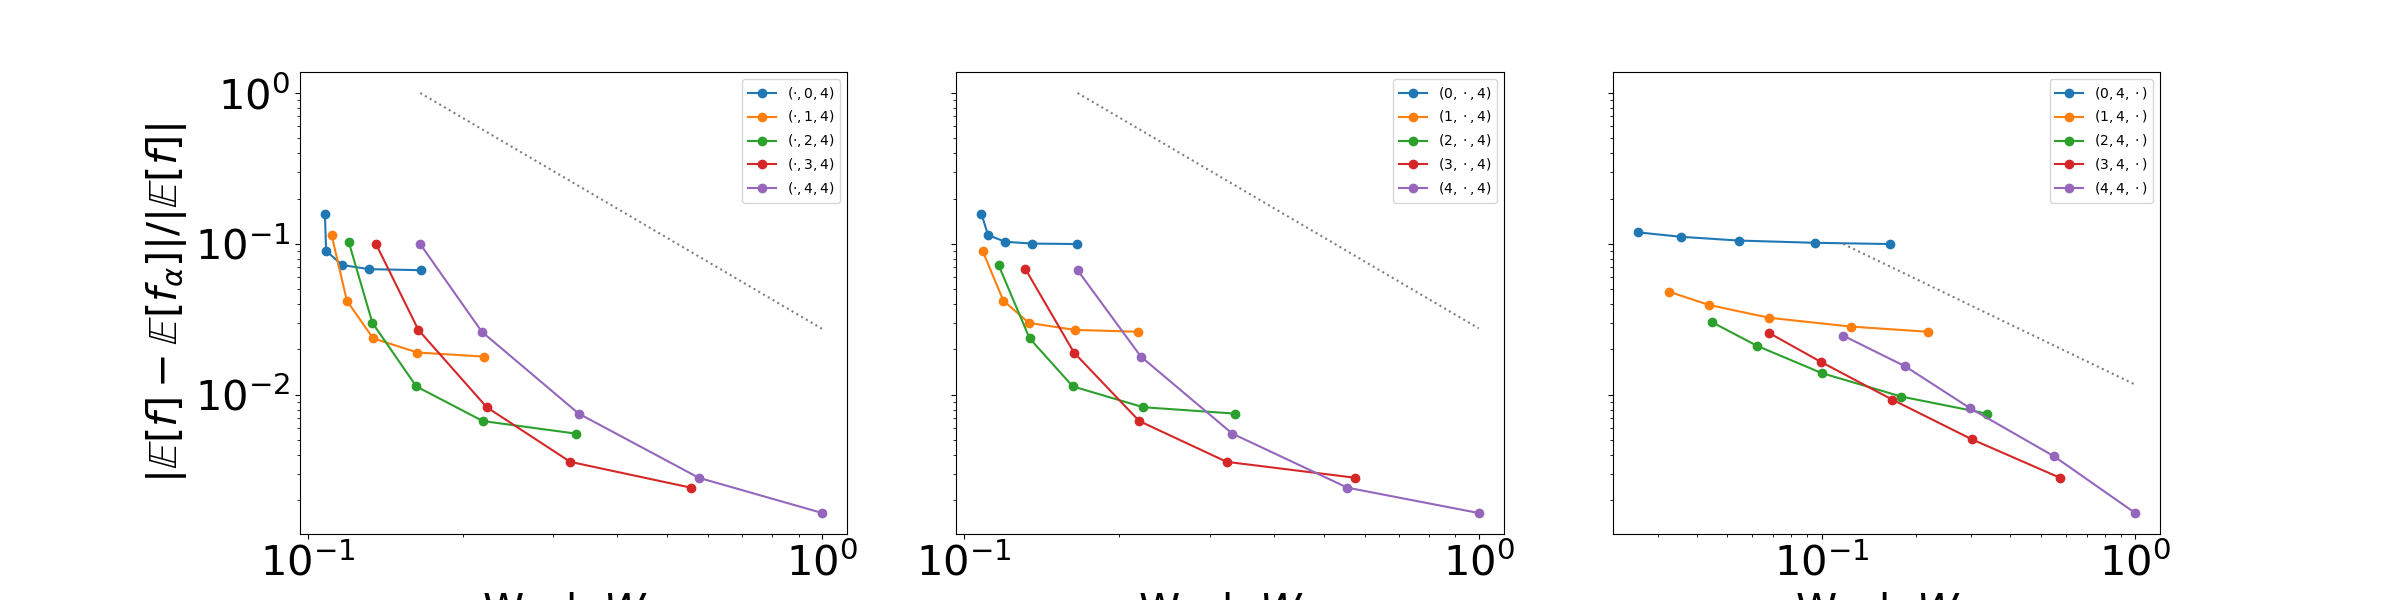 plot advection diffusion model